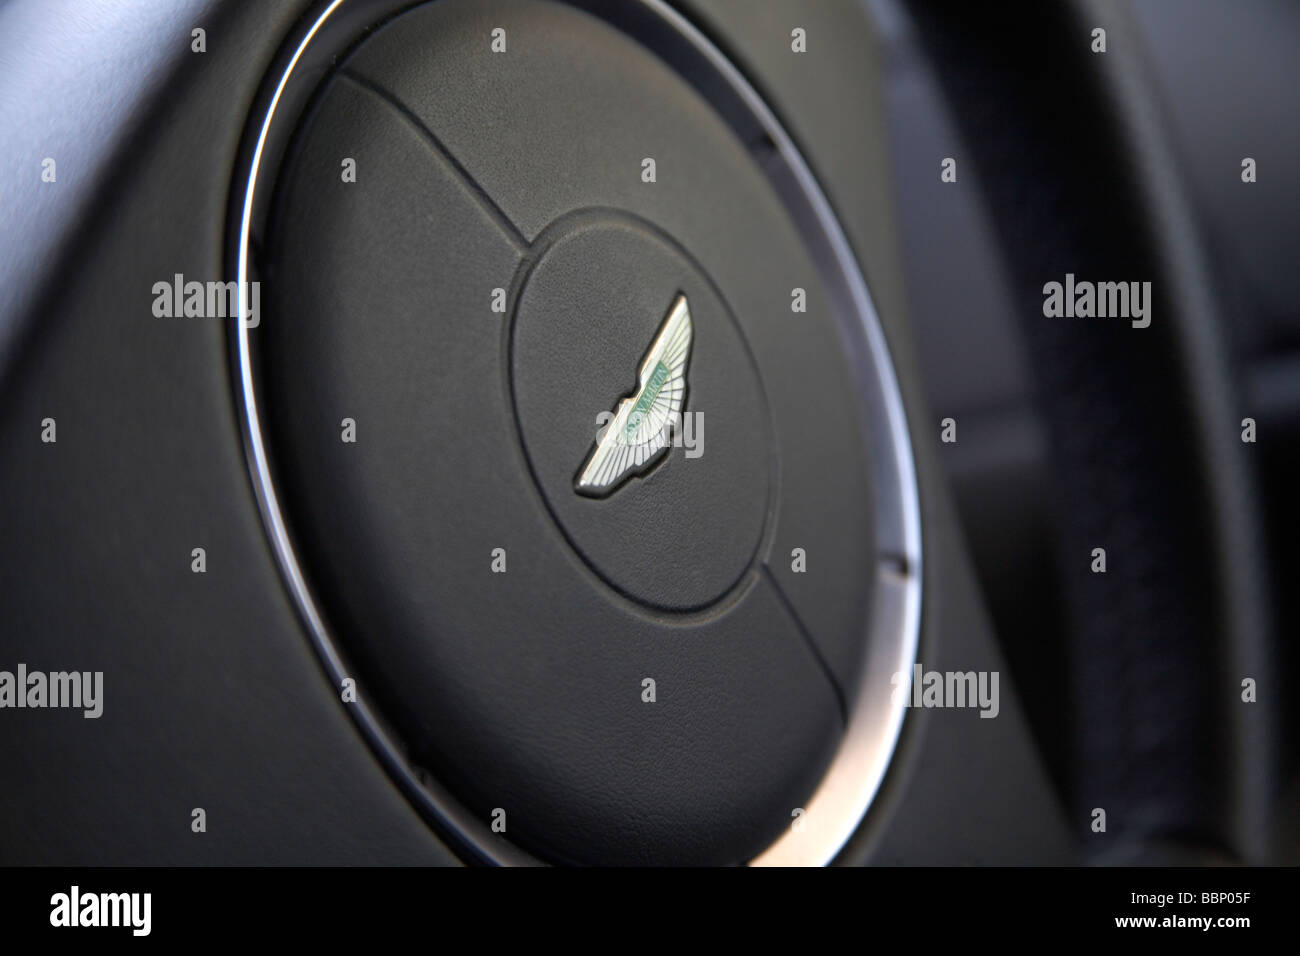 Aston Martin V8 Vantage interior Steering wheel Stock Photo